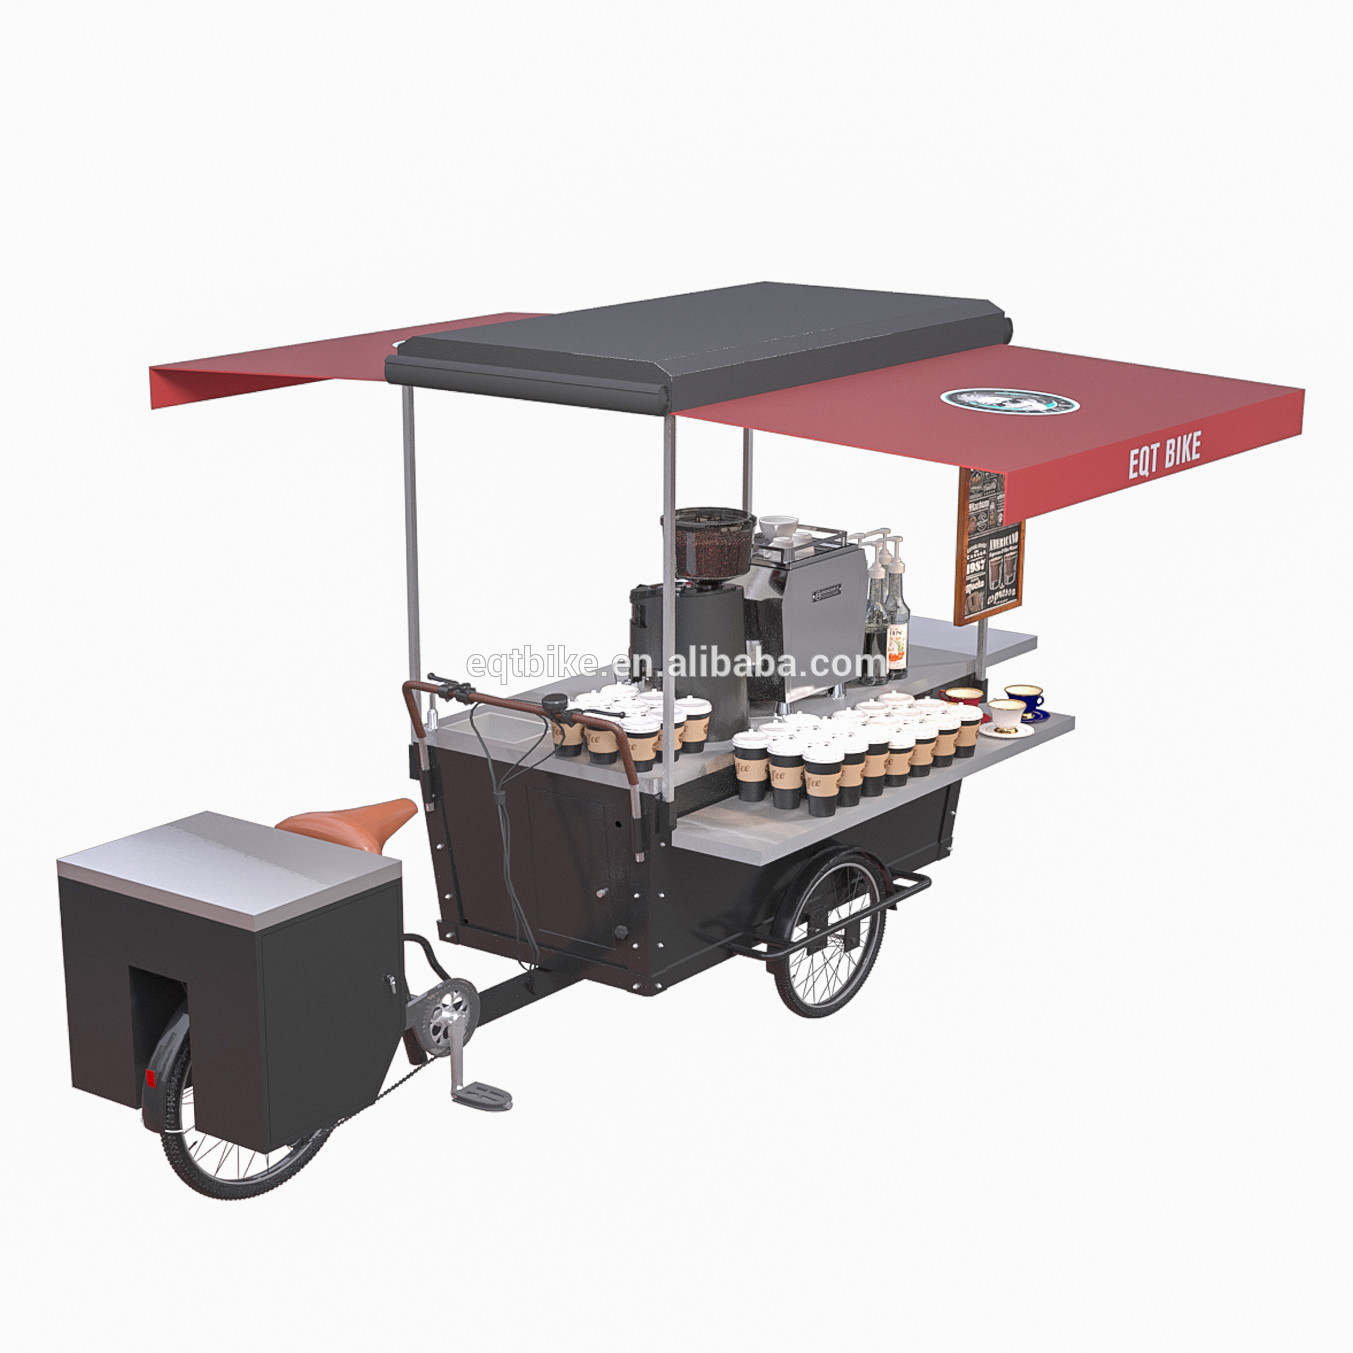 Hot Dog Mobile Multifunction Bike Food Cart For Commercial Street